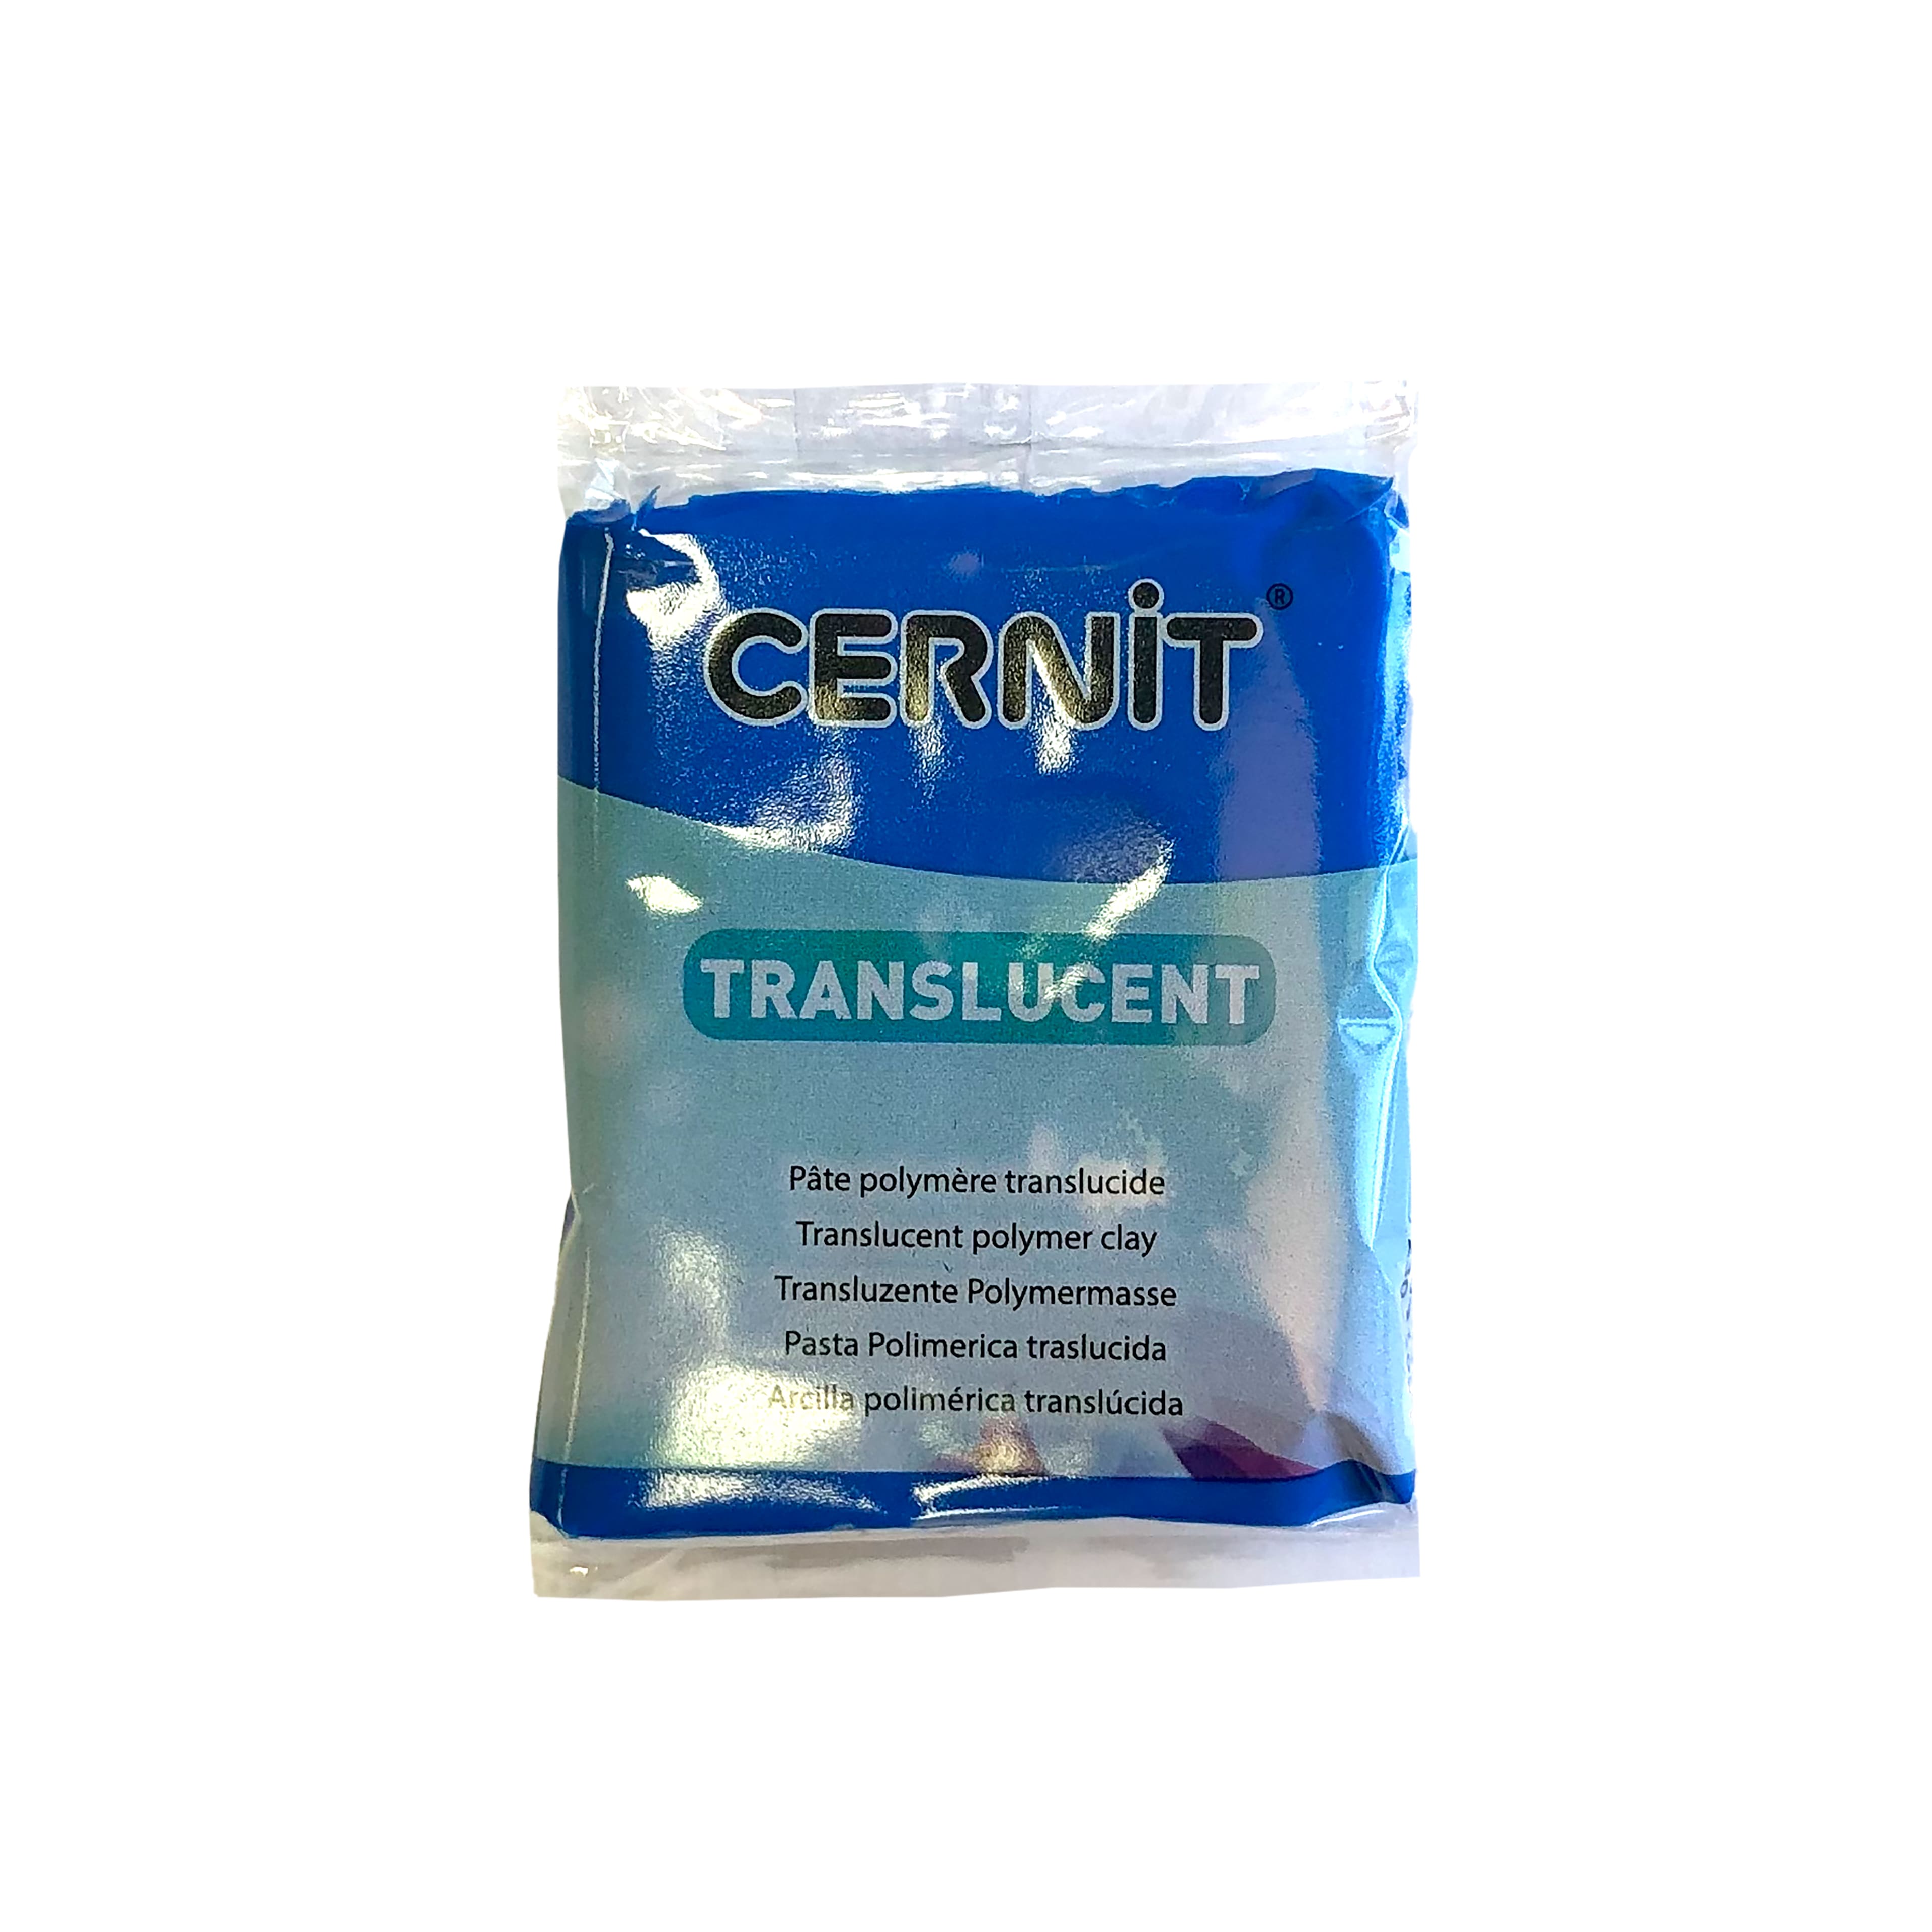 CERNIT Translucent Polymer Clay • CITY STATIONERY GROUP SAL